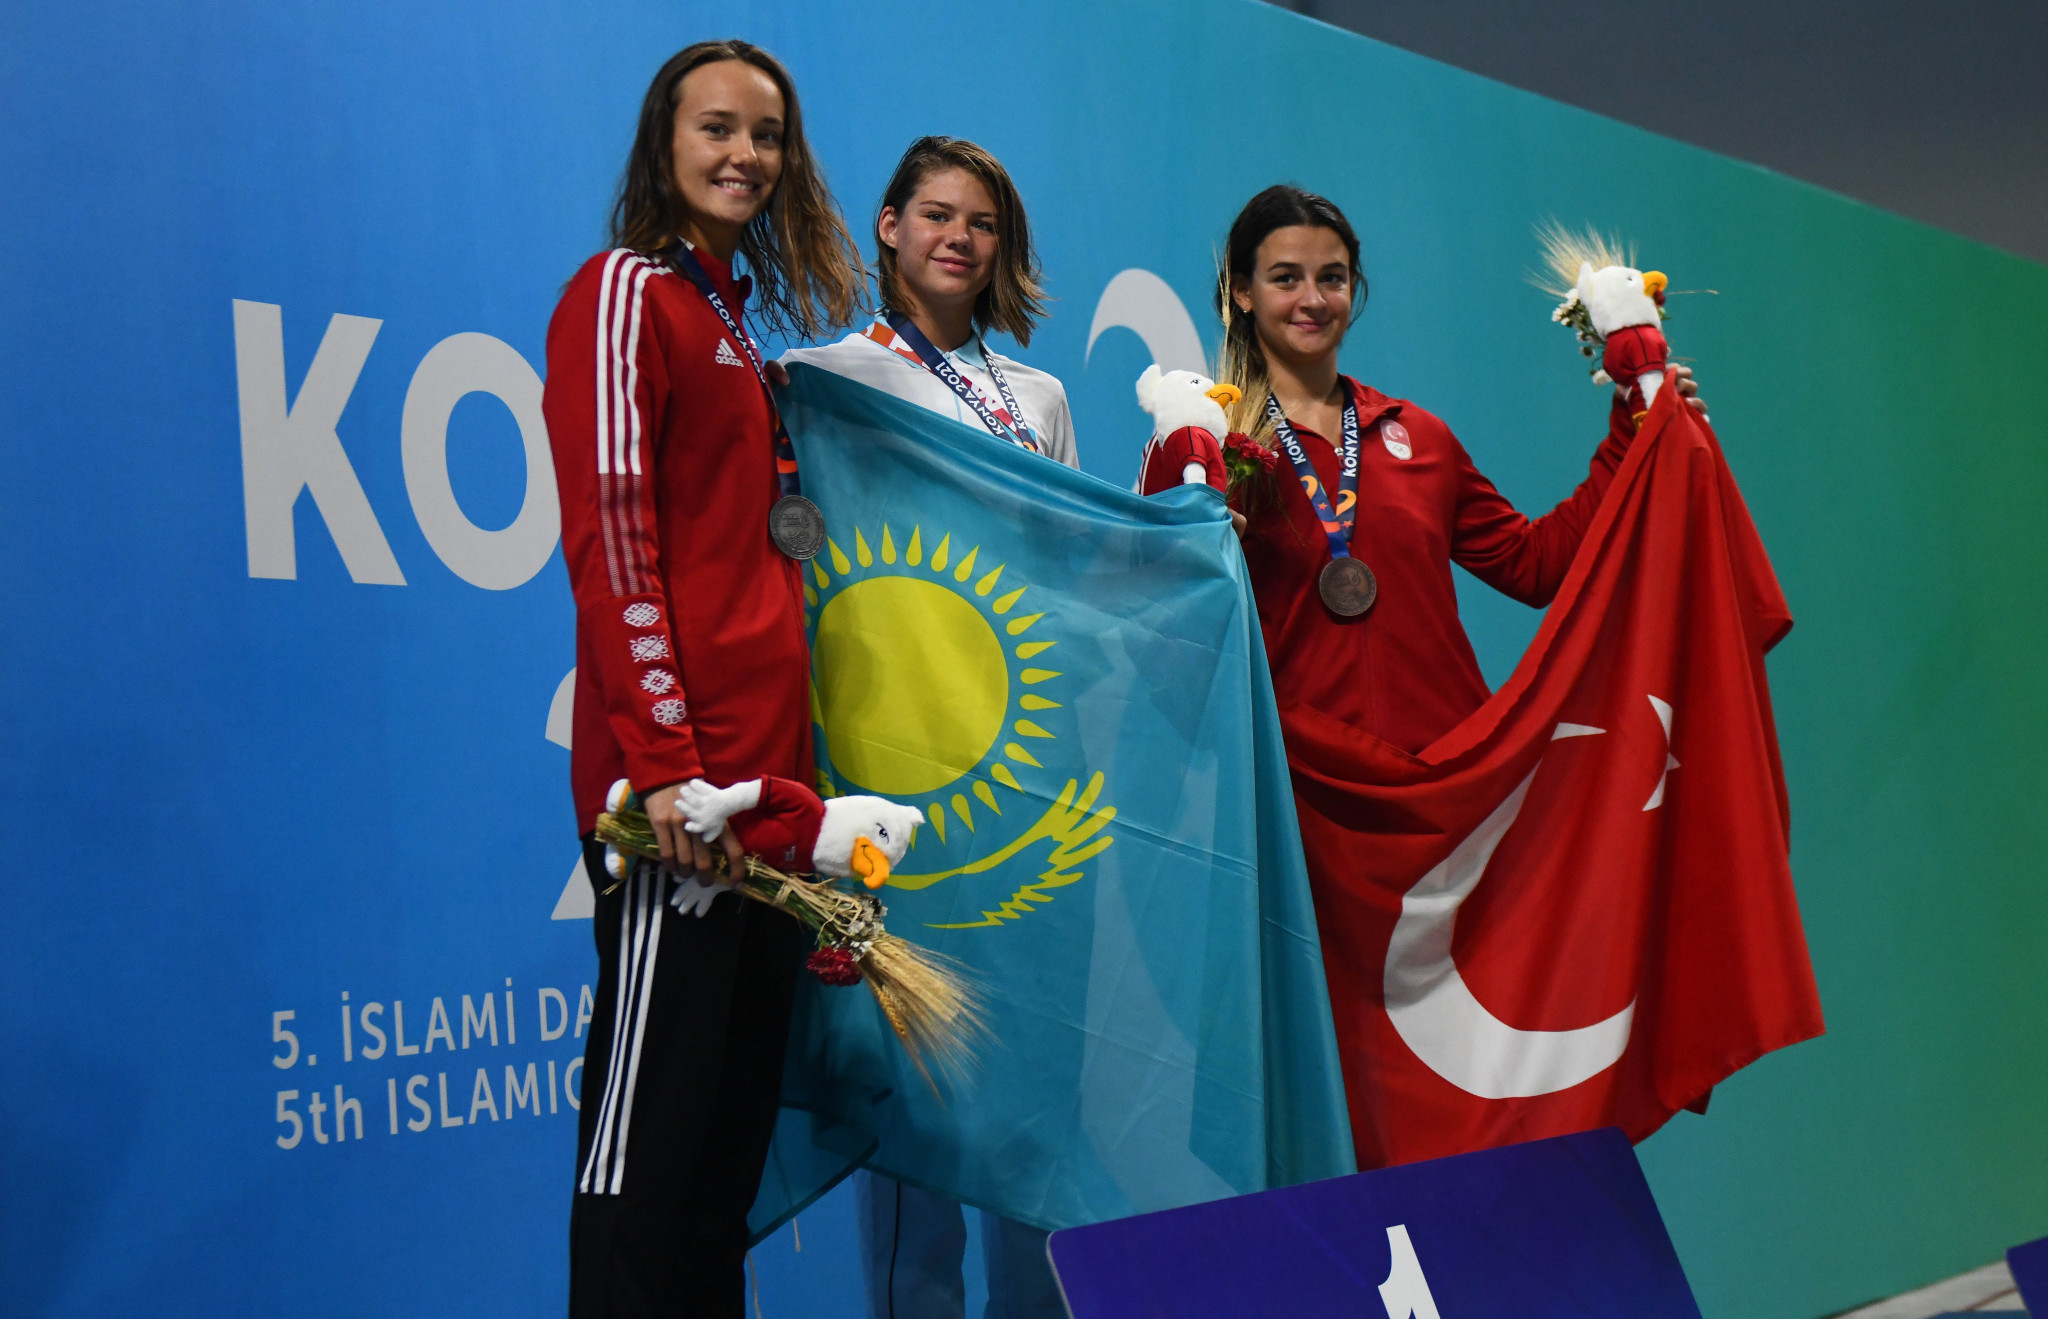 Anastasia Pchelintseva of Kazakhstan was the only non-Turkish swimmer to win gold ©Konya 2021